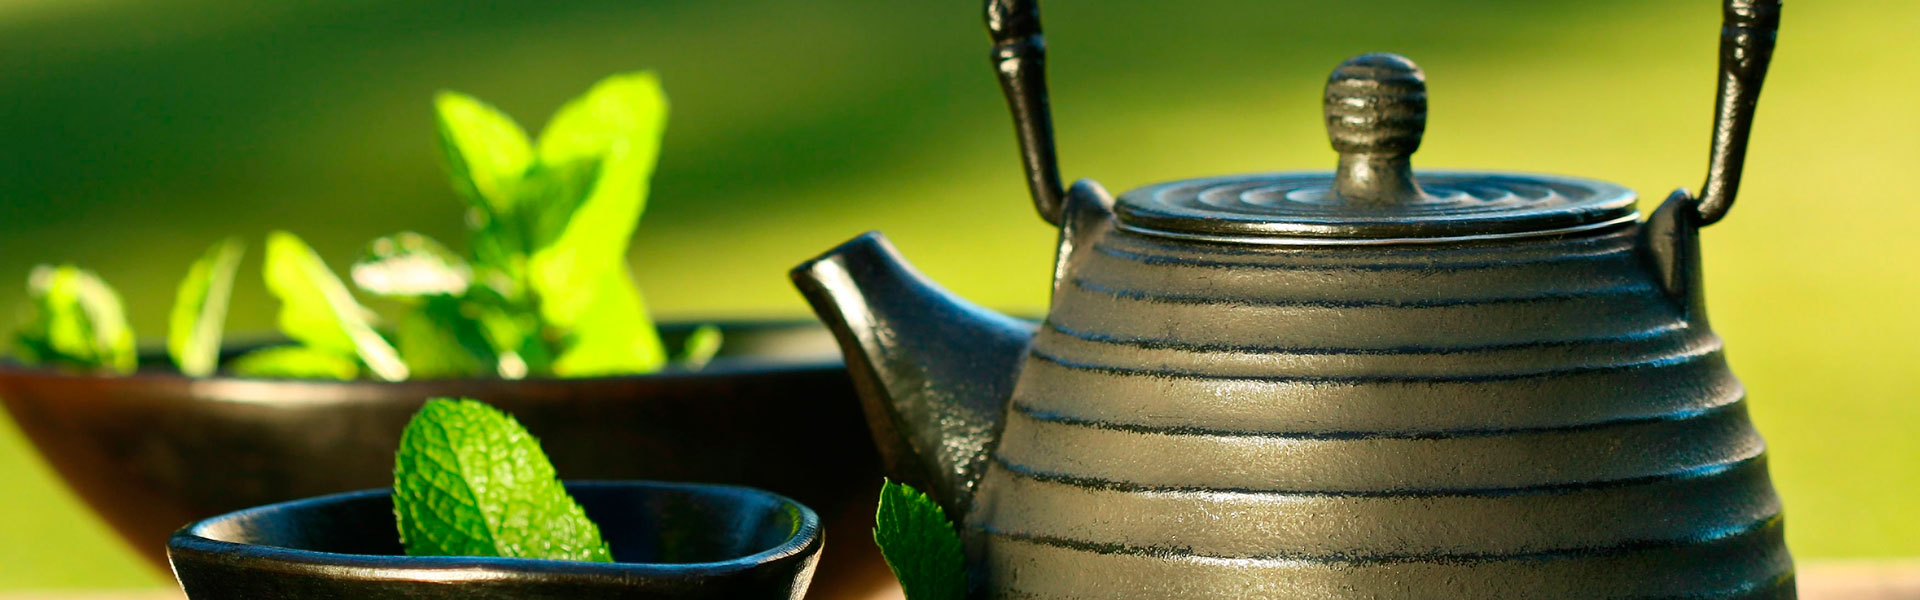 herbs-tea-pot